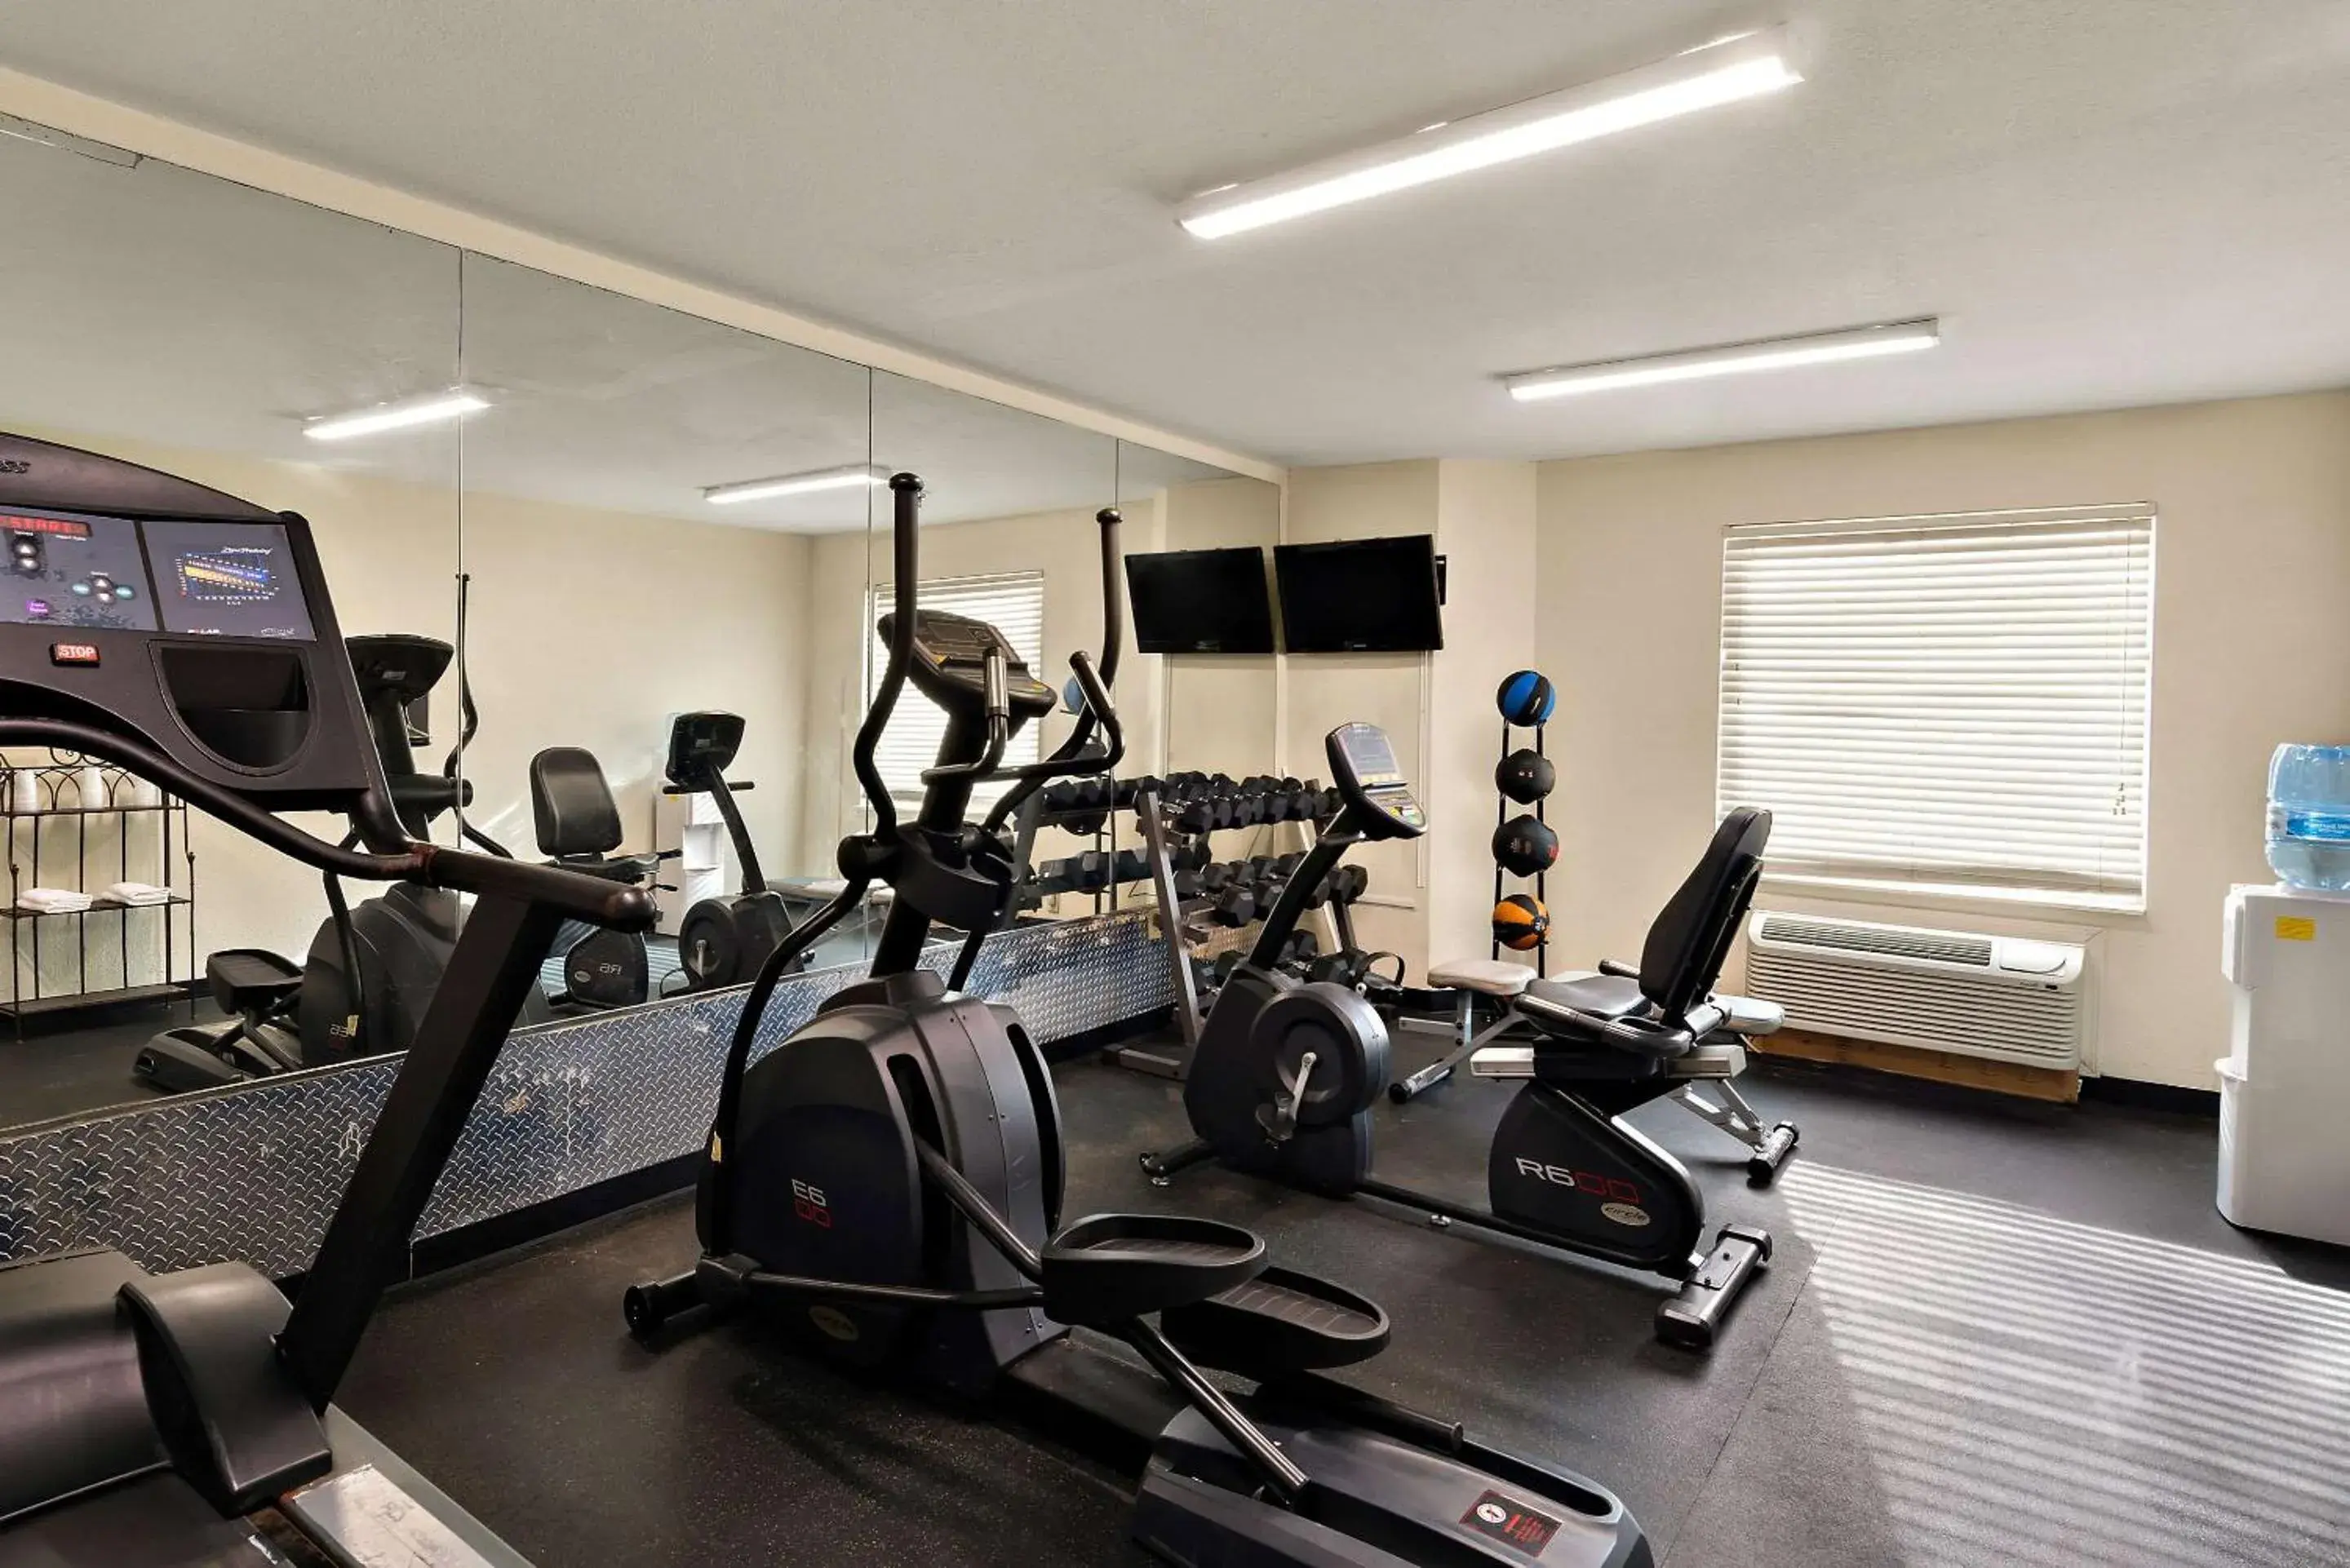 Fitness centre/facilities, Fitness Center/Facilities in Quality Inn Memphis Northeast near I-40